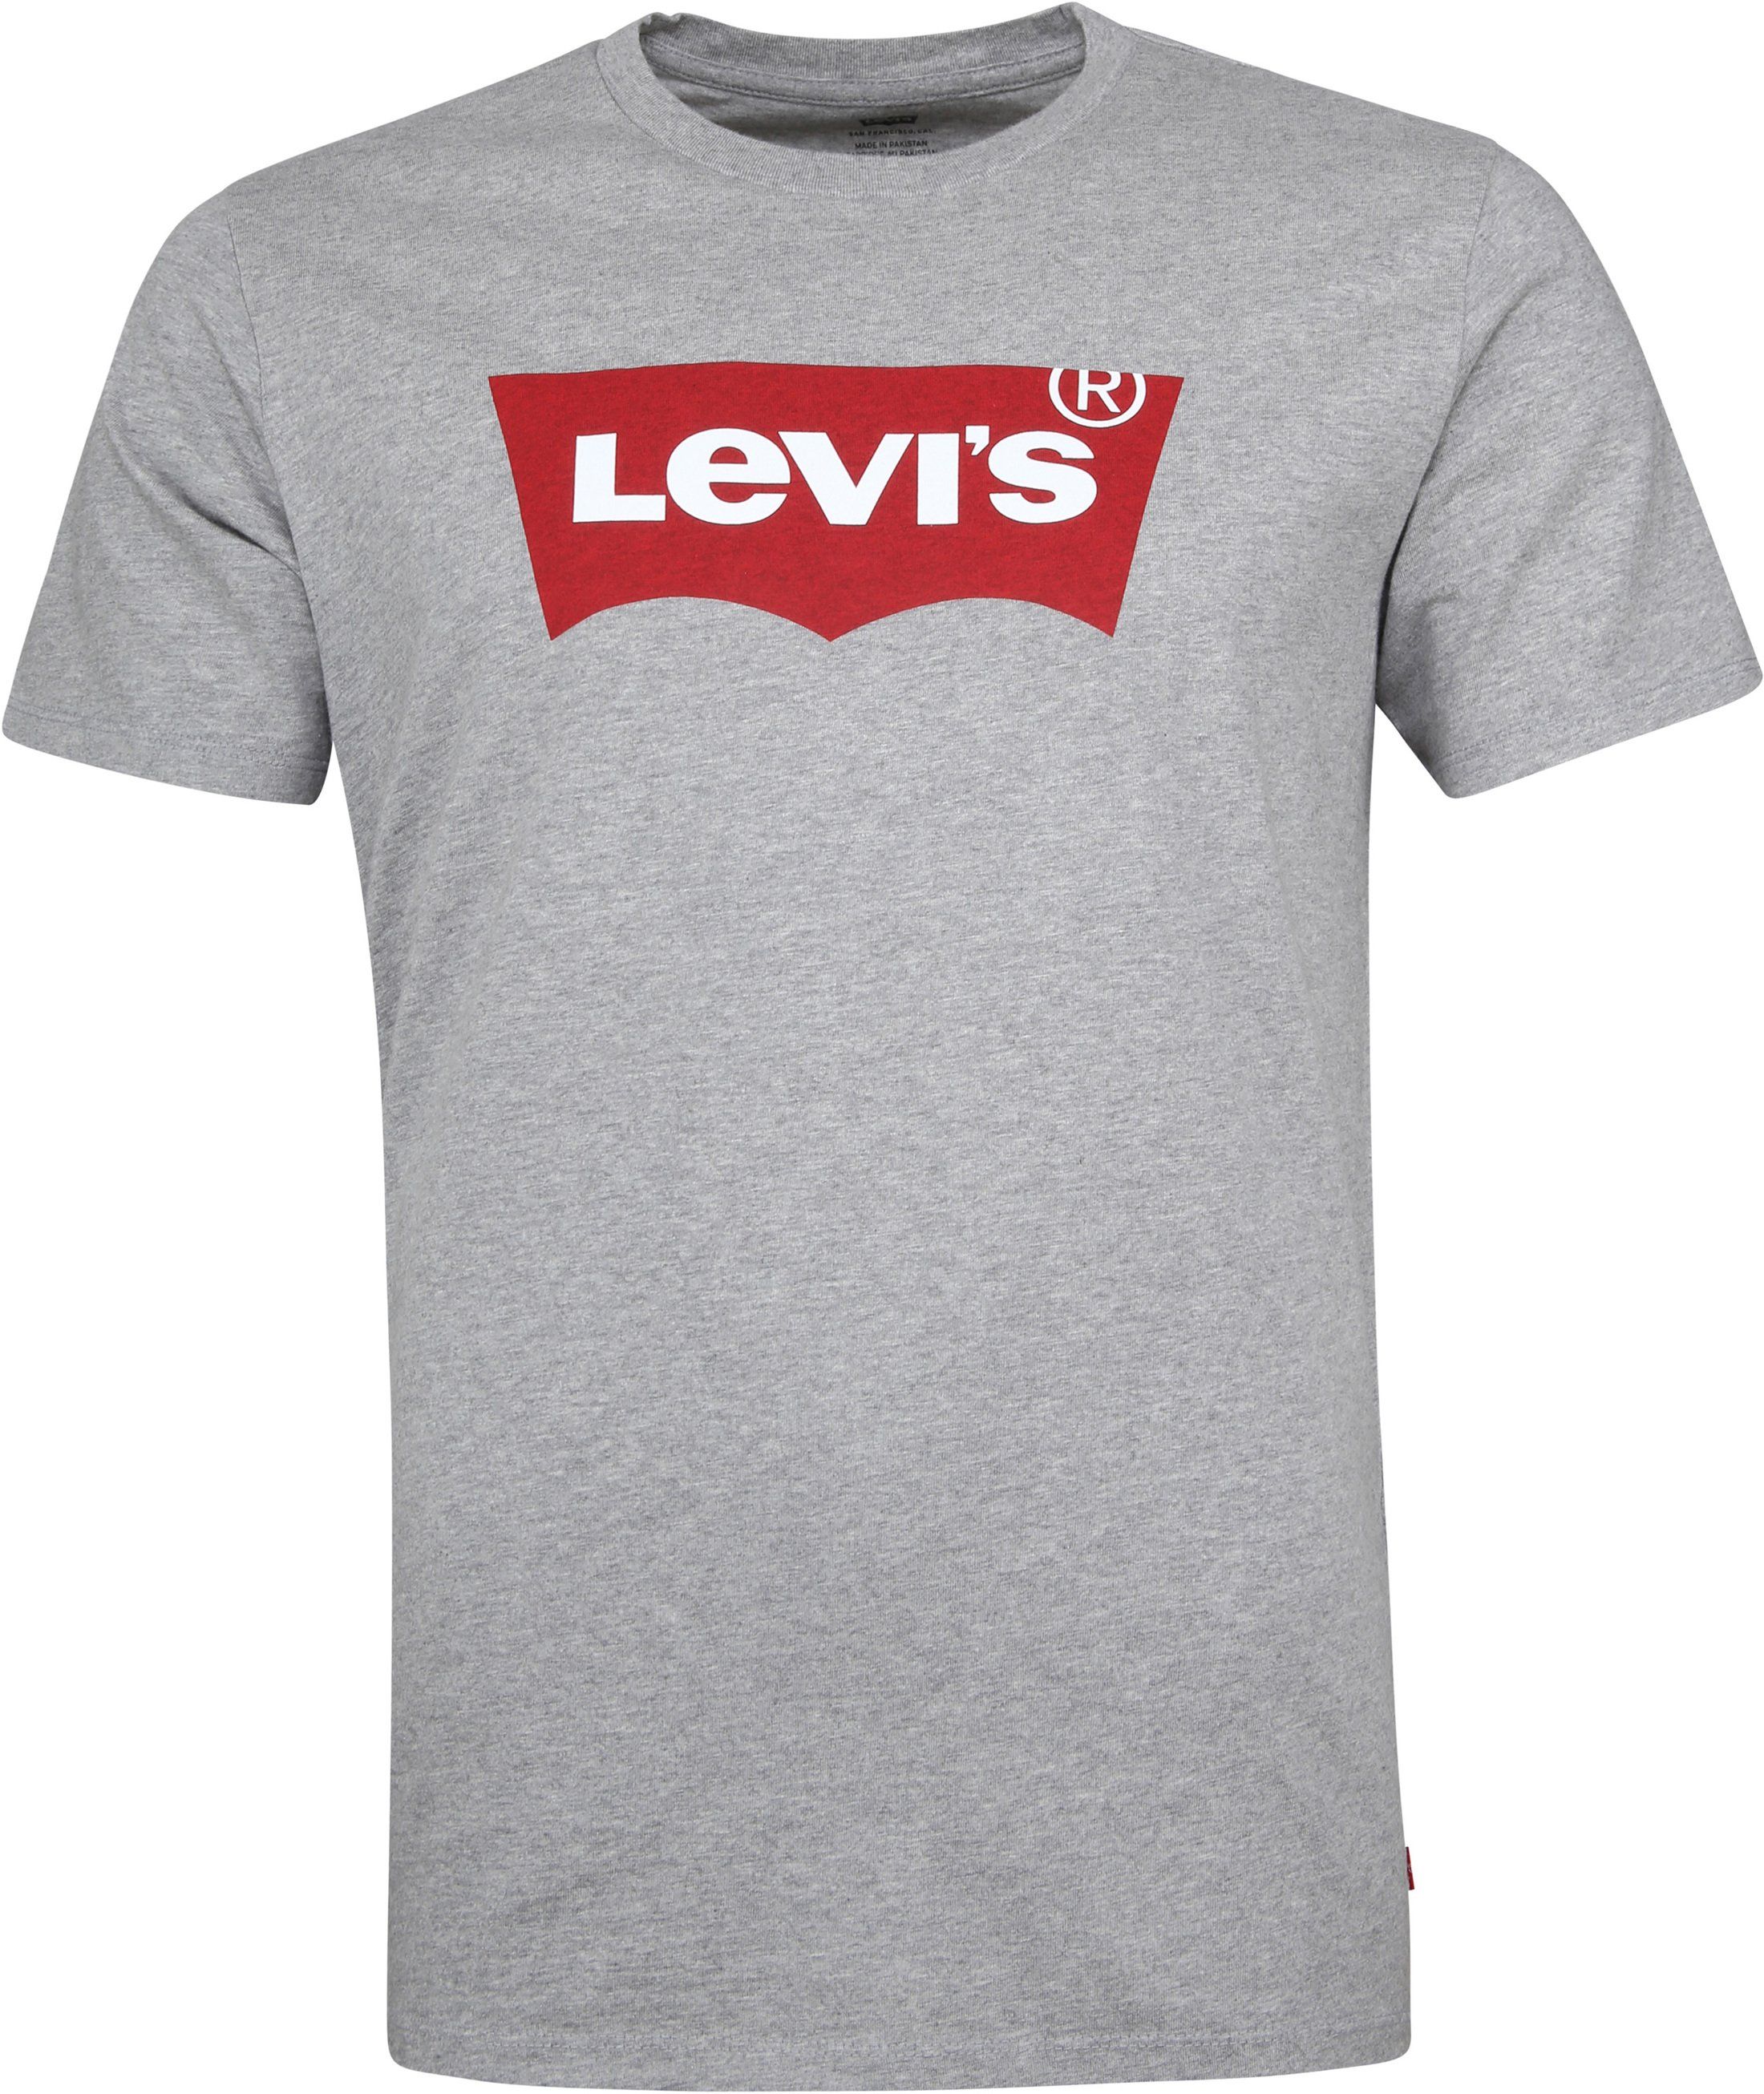 Levi's T-shirt Logo Print Graphic Grey size L